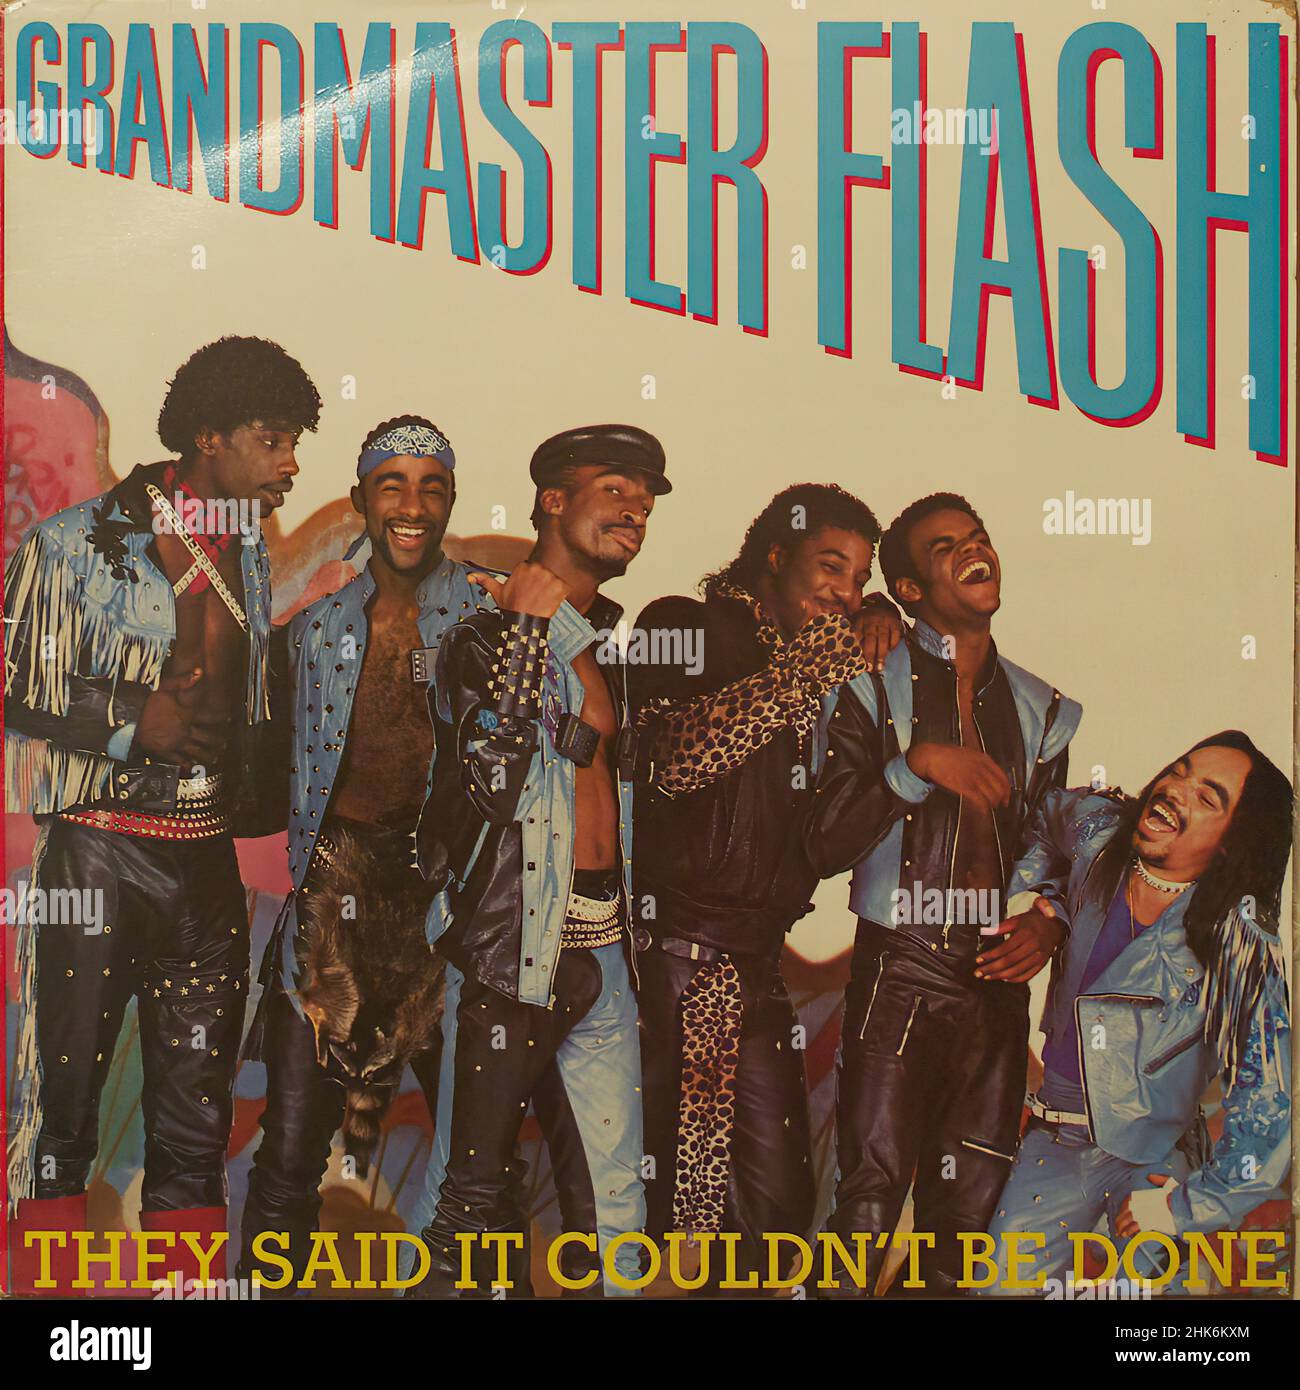 Grandmaster Flash & The Furious Five - Album by Grandmaster Flash & The Furious  Five